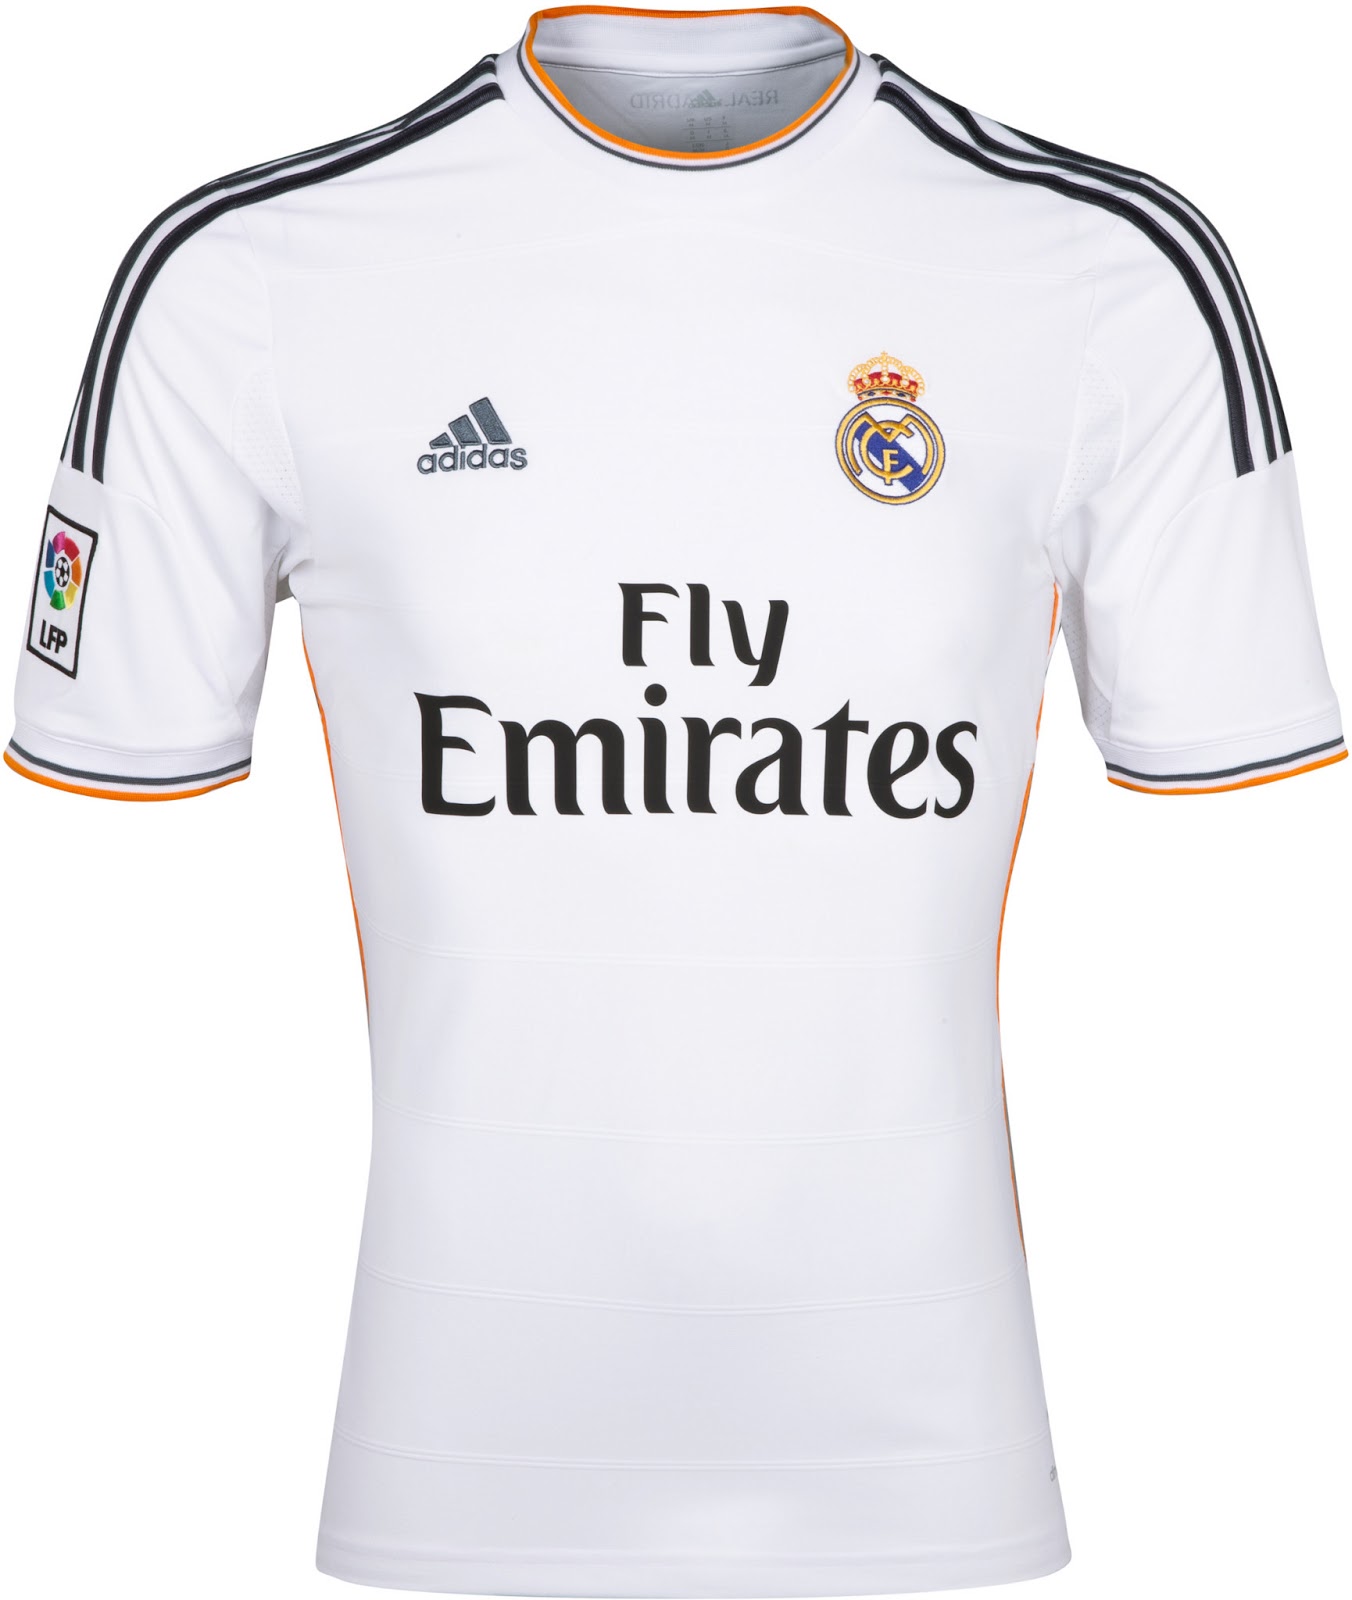 Real Madrid thuisshirt 2013/2014